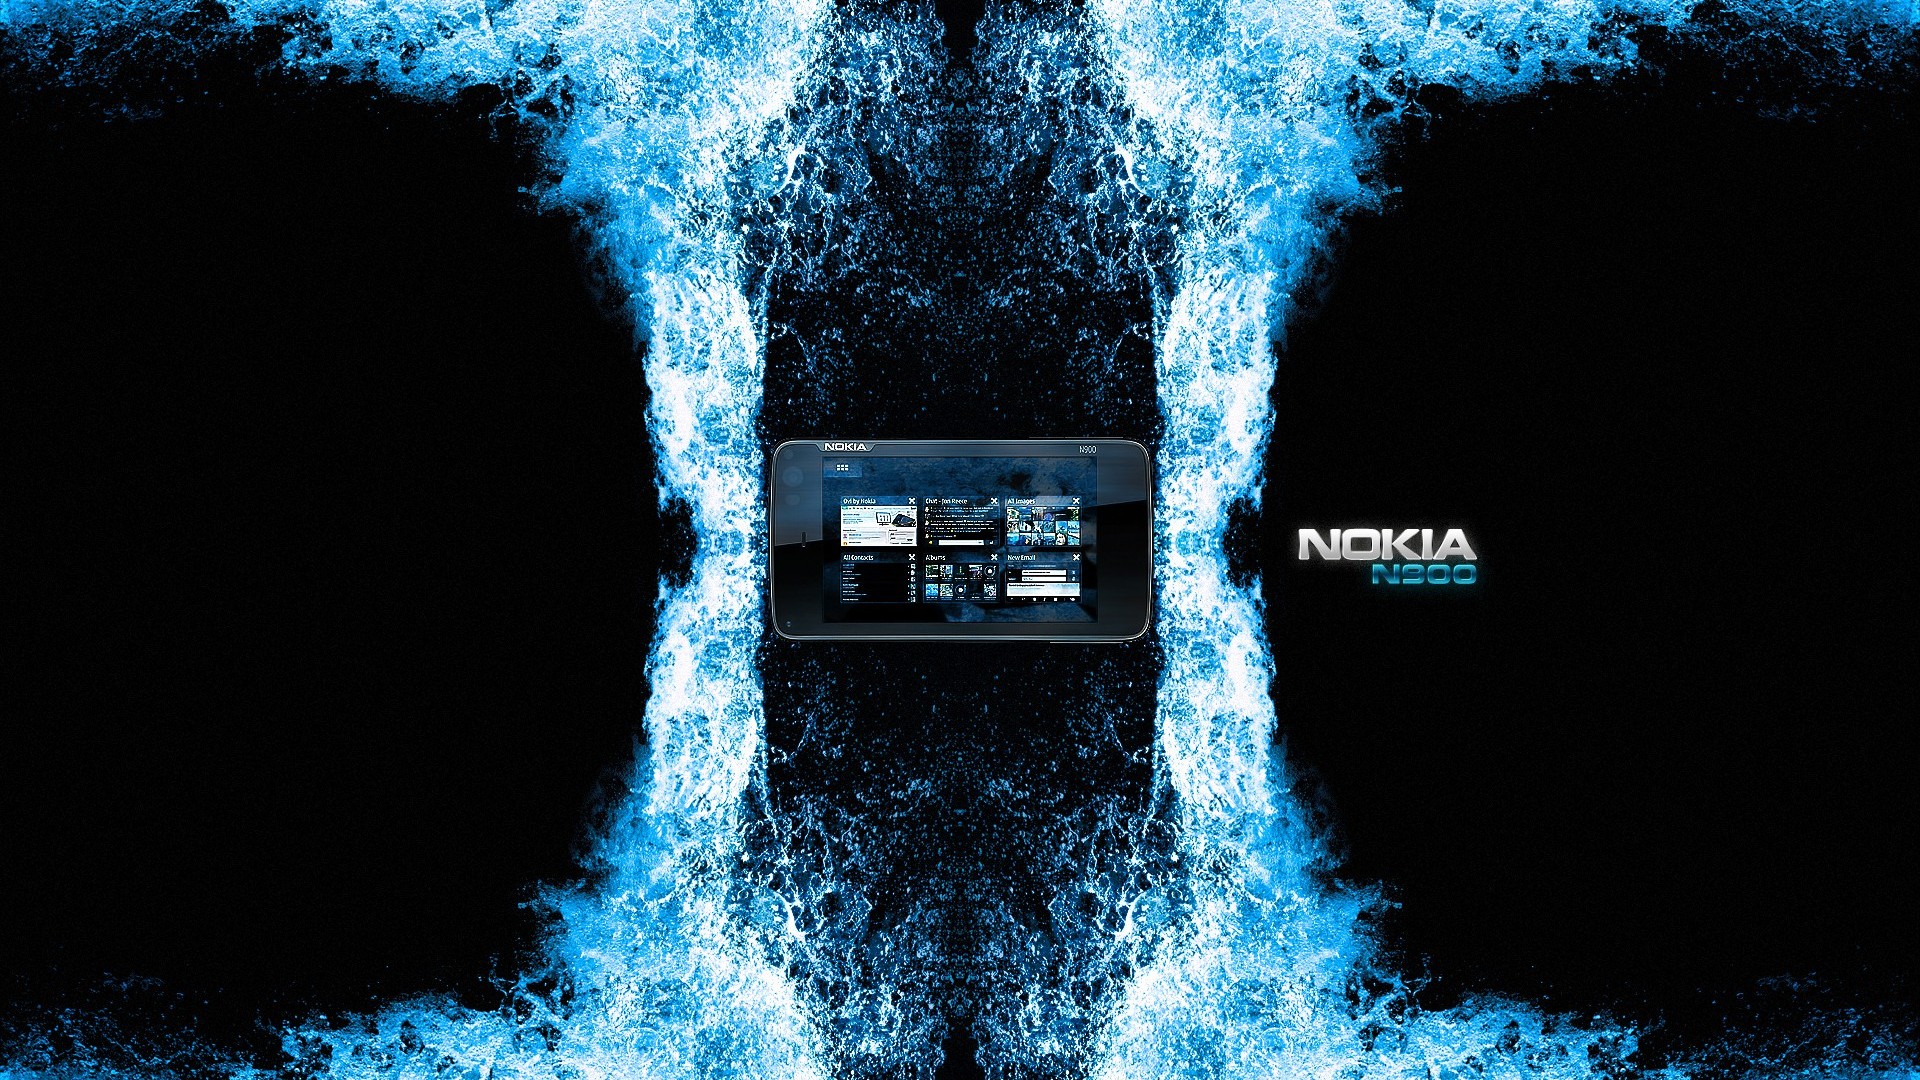 Nokia N900 HD Image Gadgets